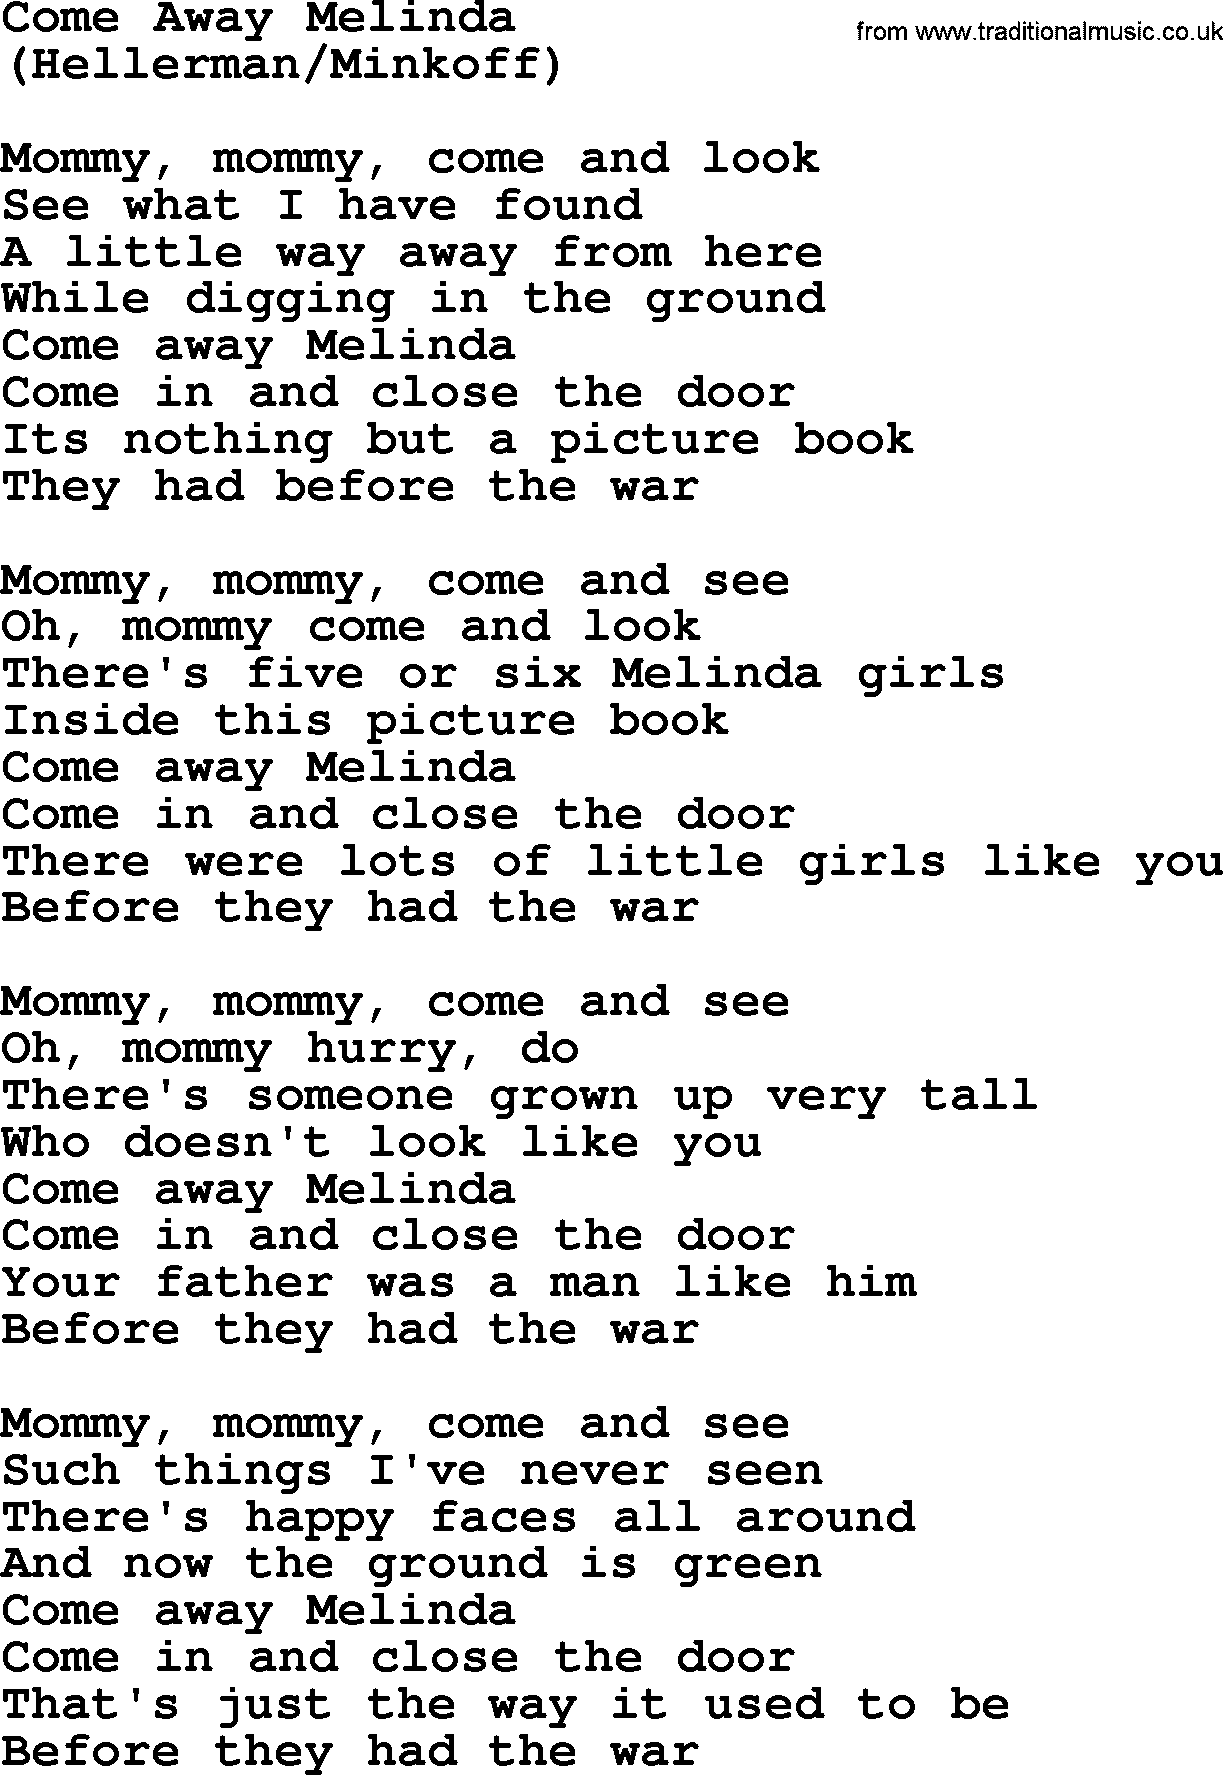 The Byrds song Come Away Melinda, lyrics